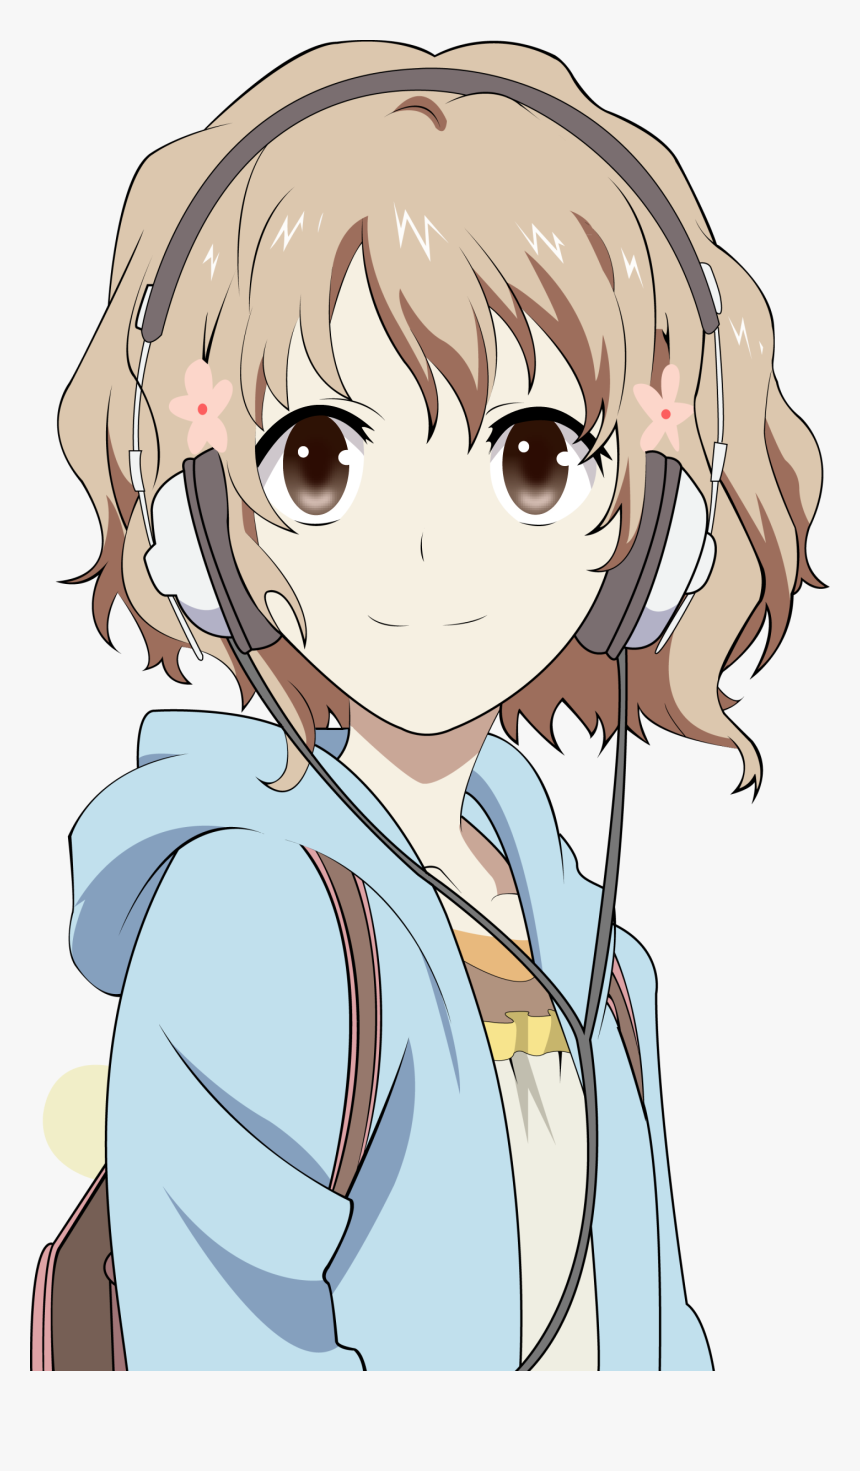 Anime Girl With Short Blonde Hair And Brown Eyes , - Short Hair Blonde